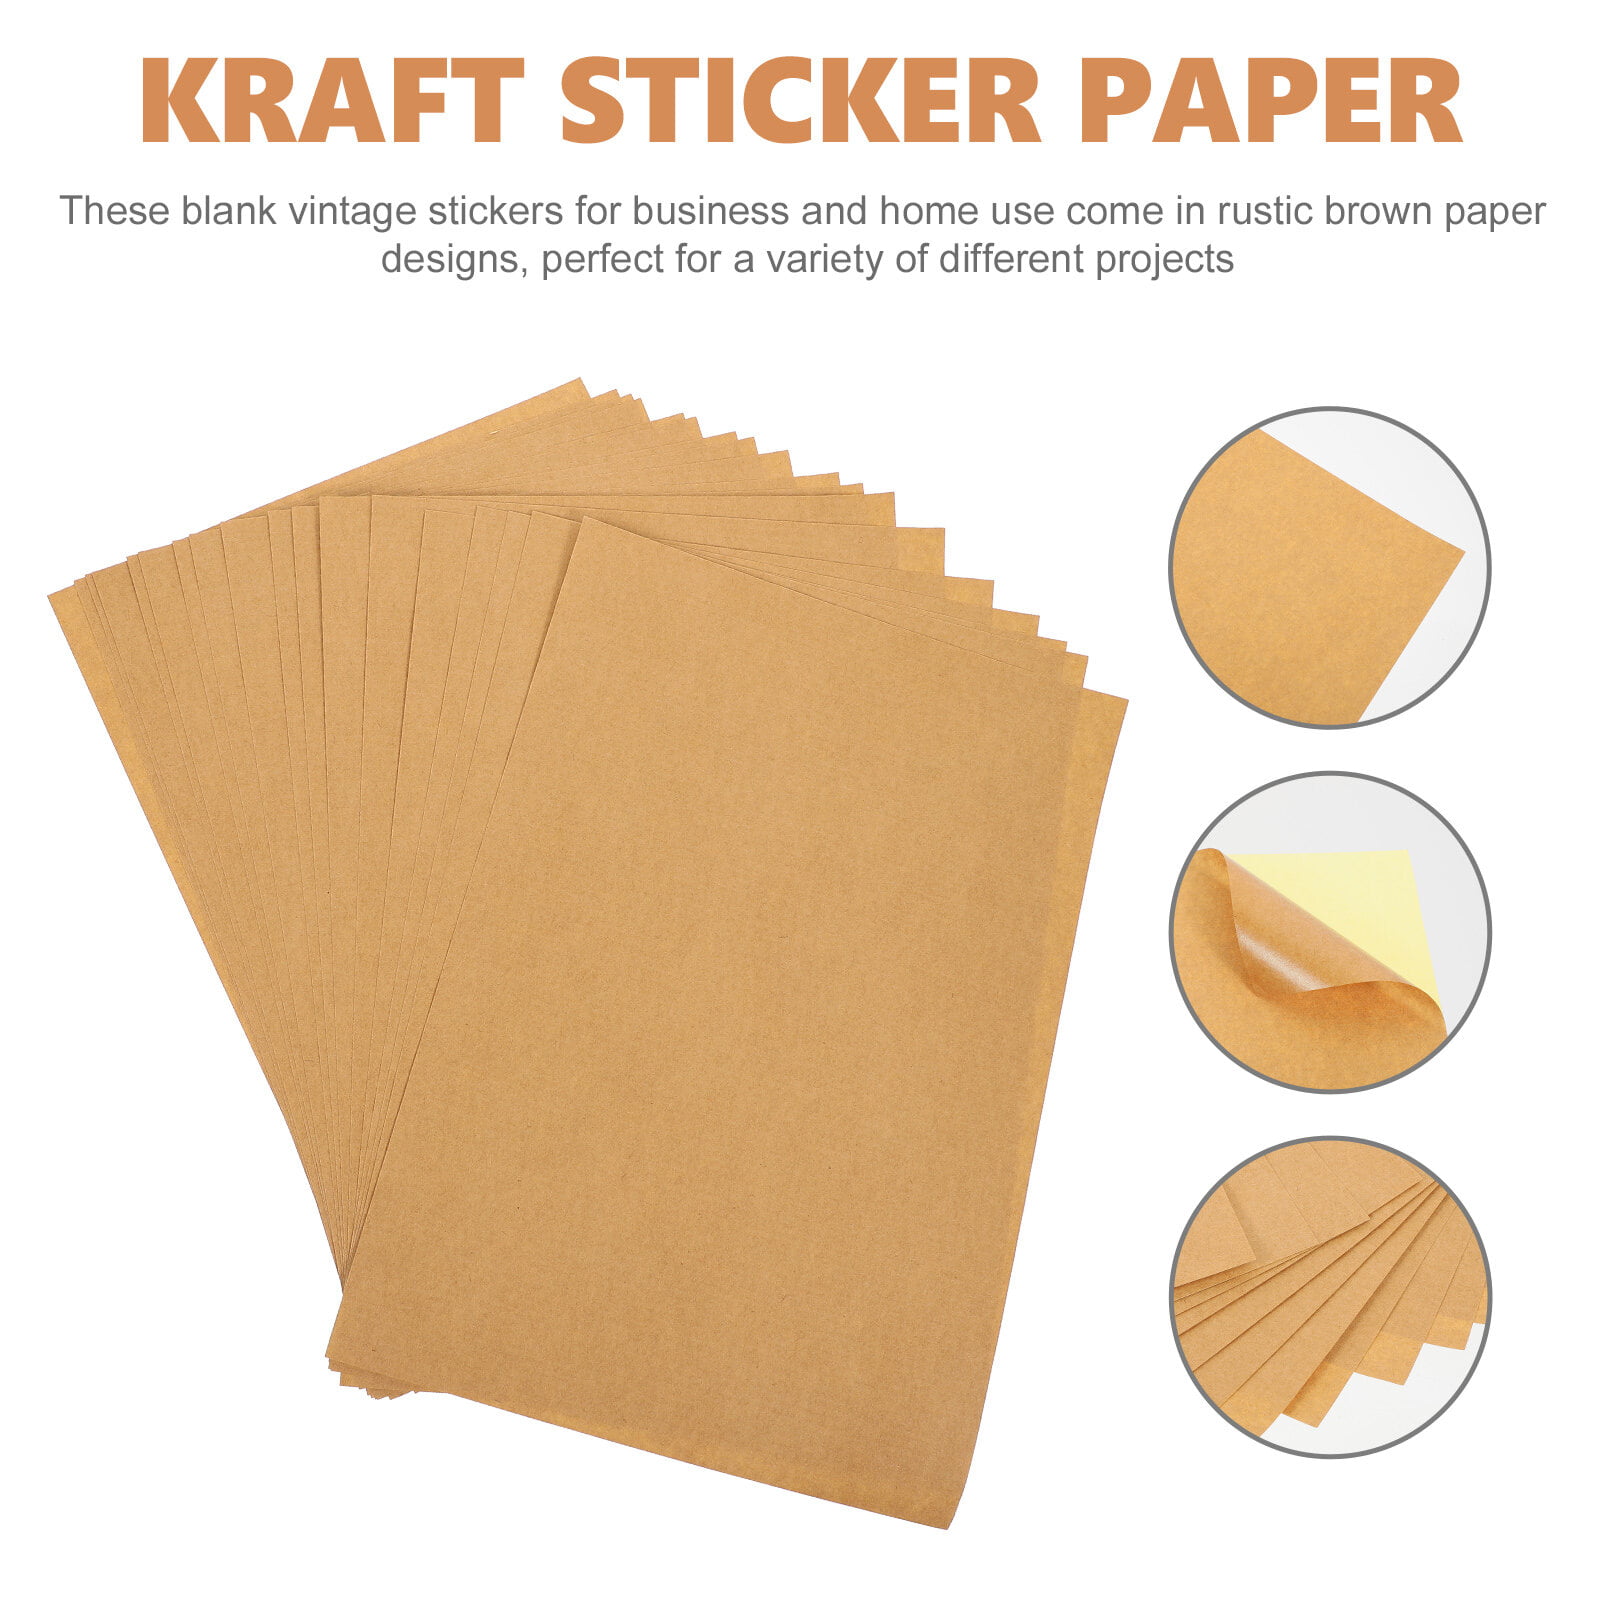 Sticky paper stock illustration. Illustration of blank - 45870725